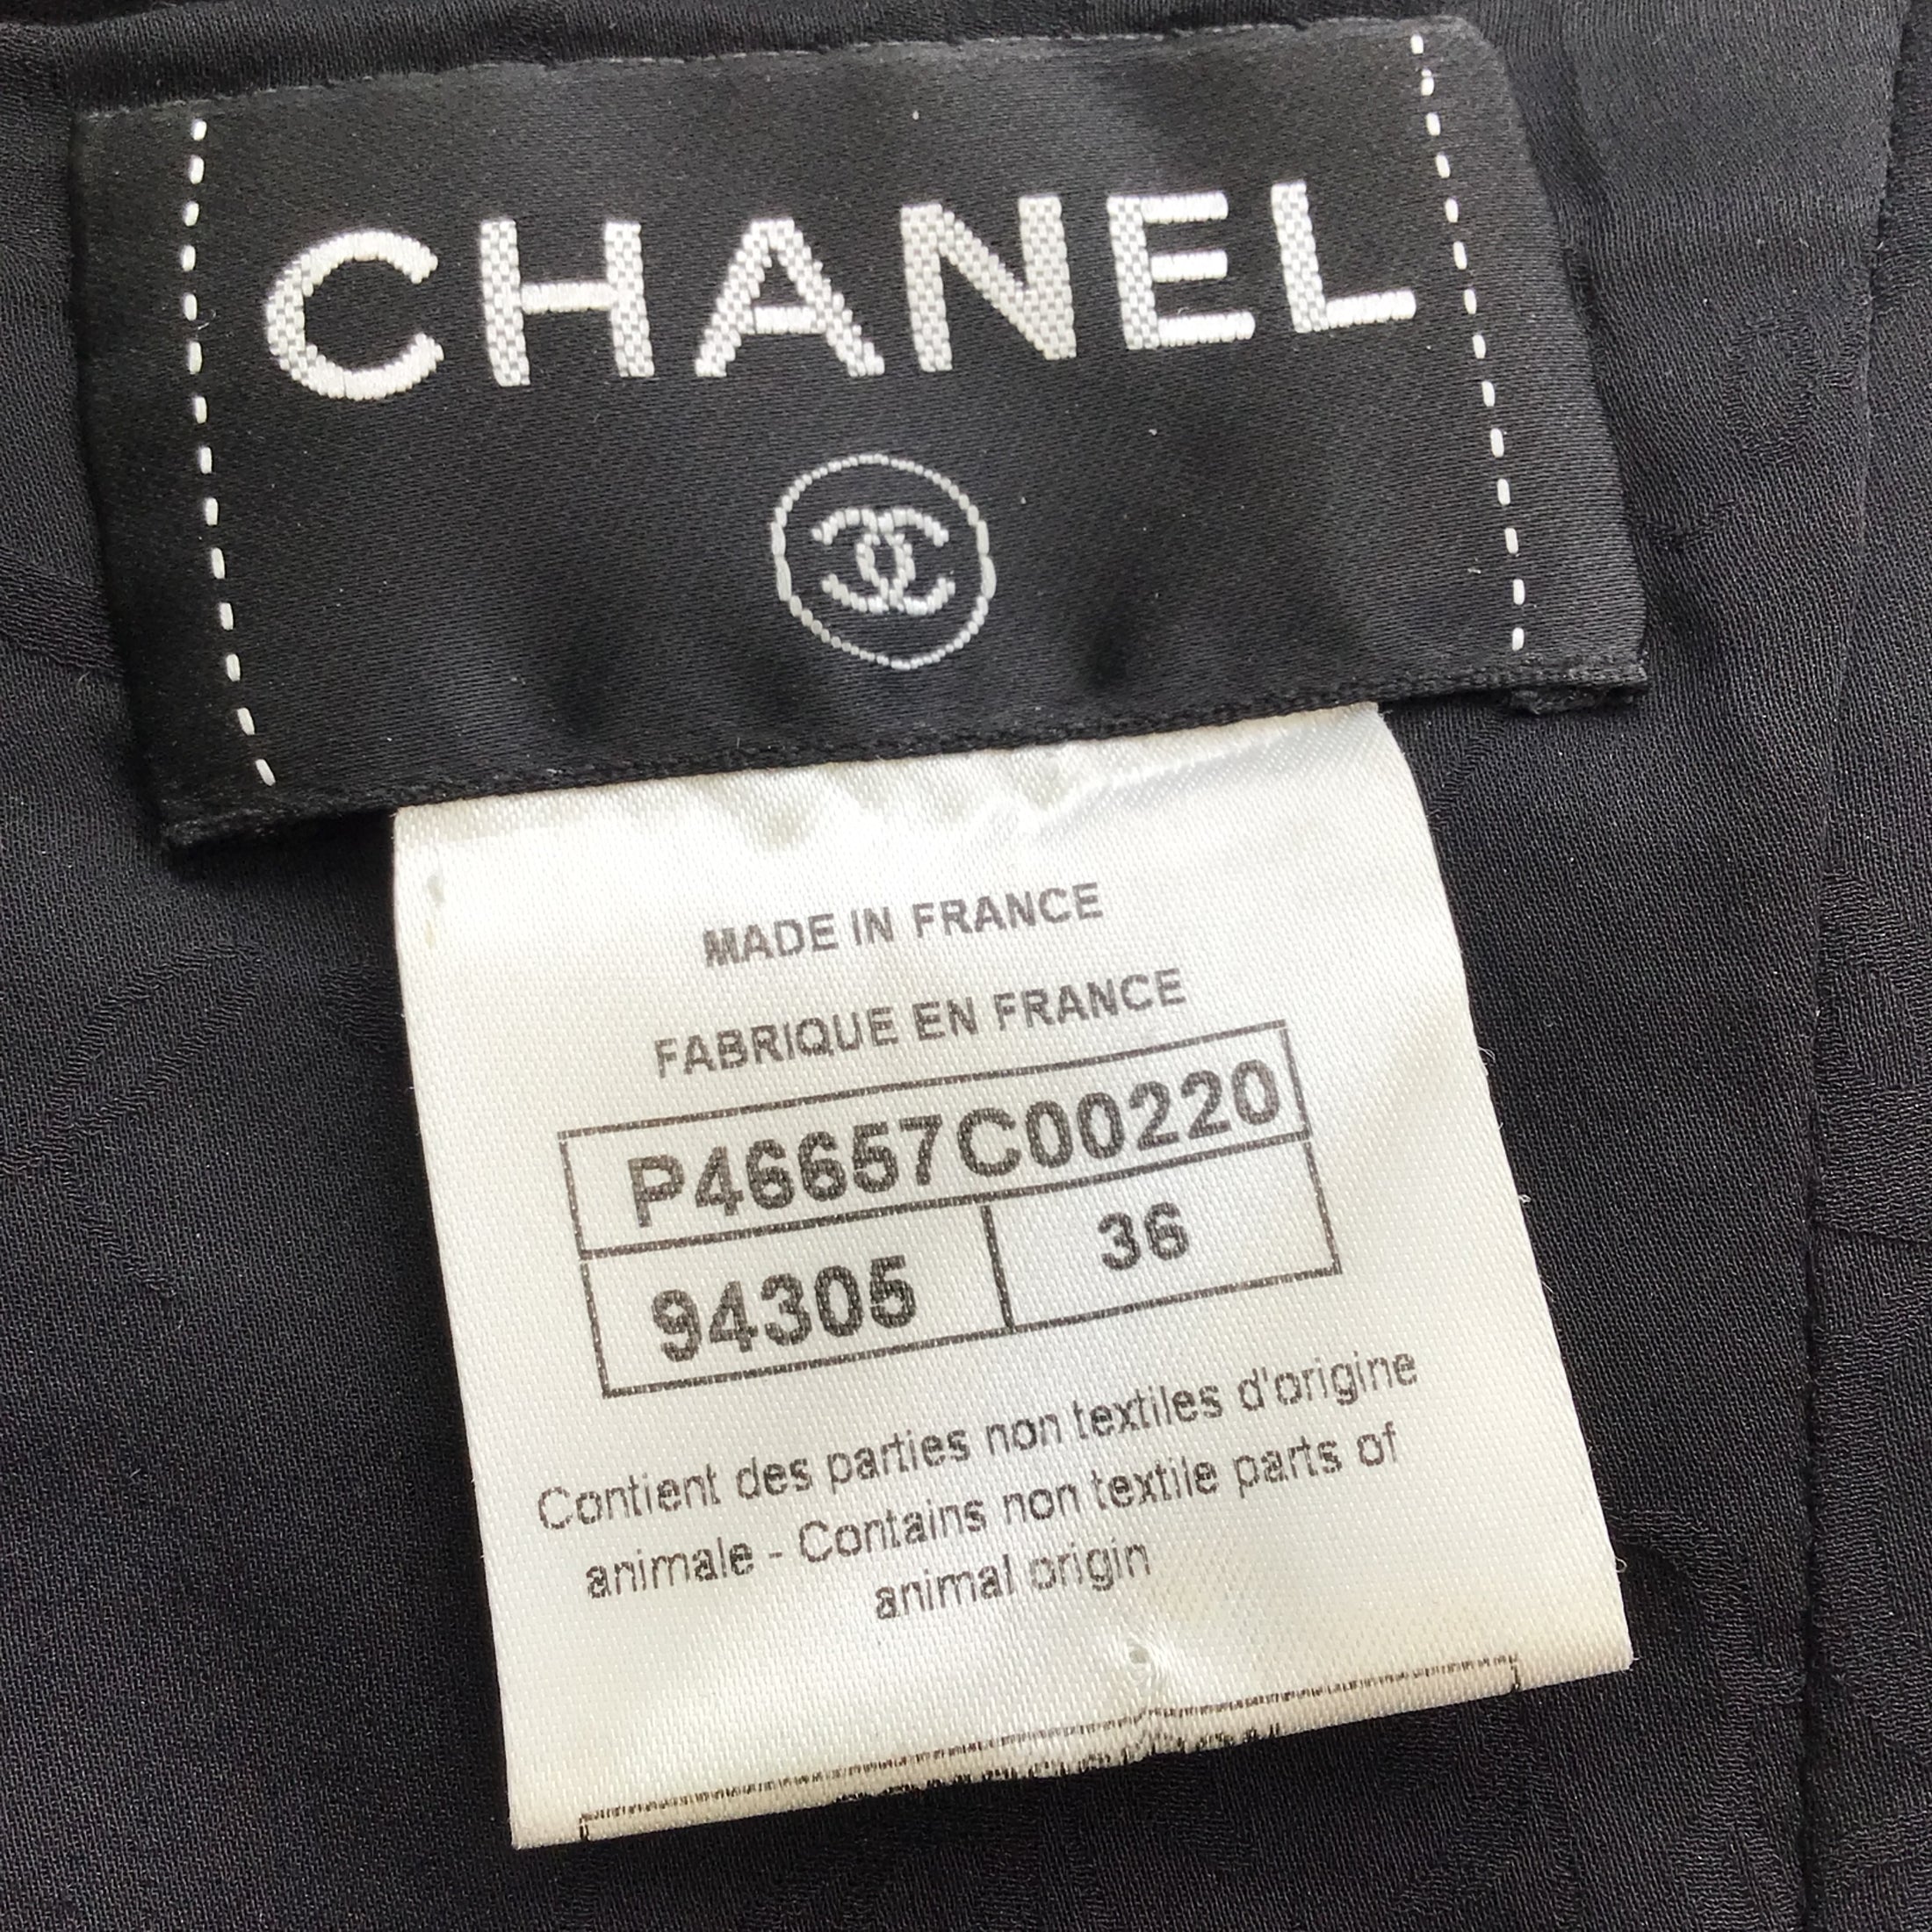 Chanel Black Long Sleeved Lambskin Leather Dress